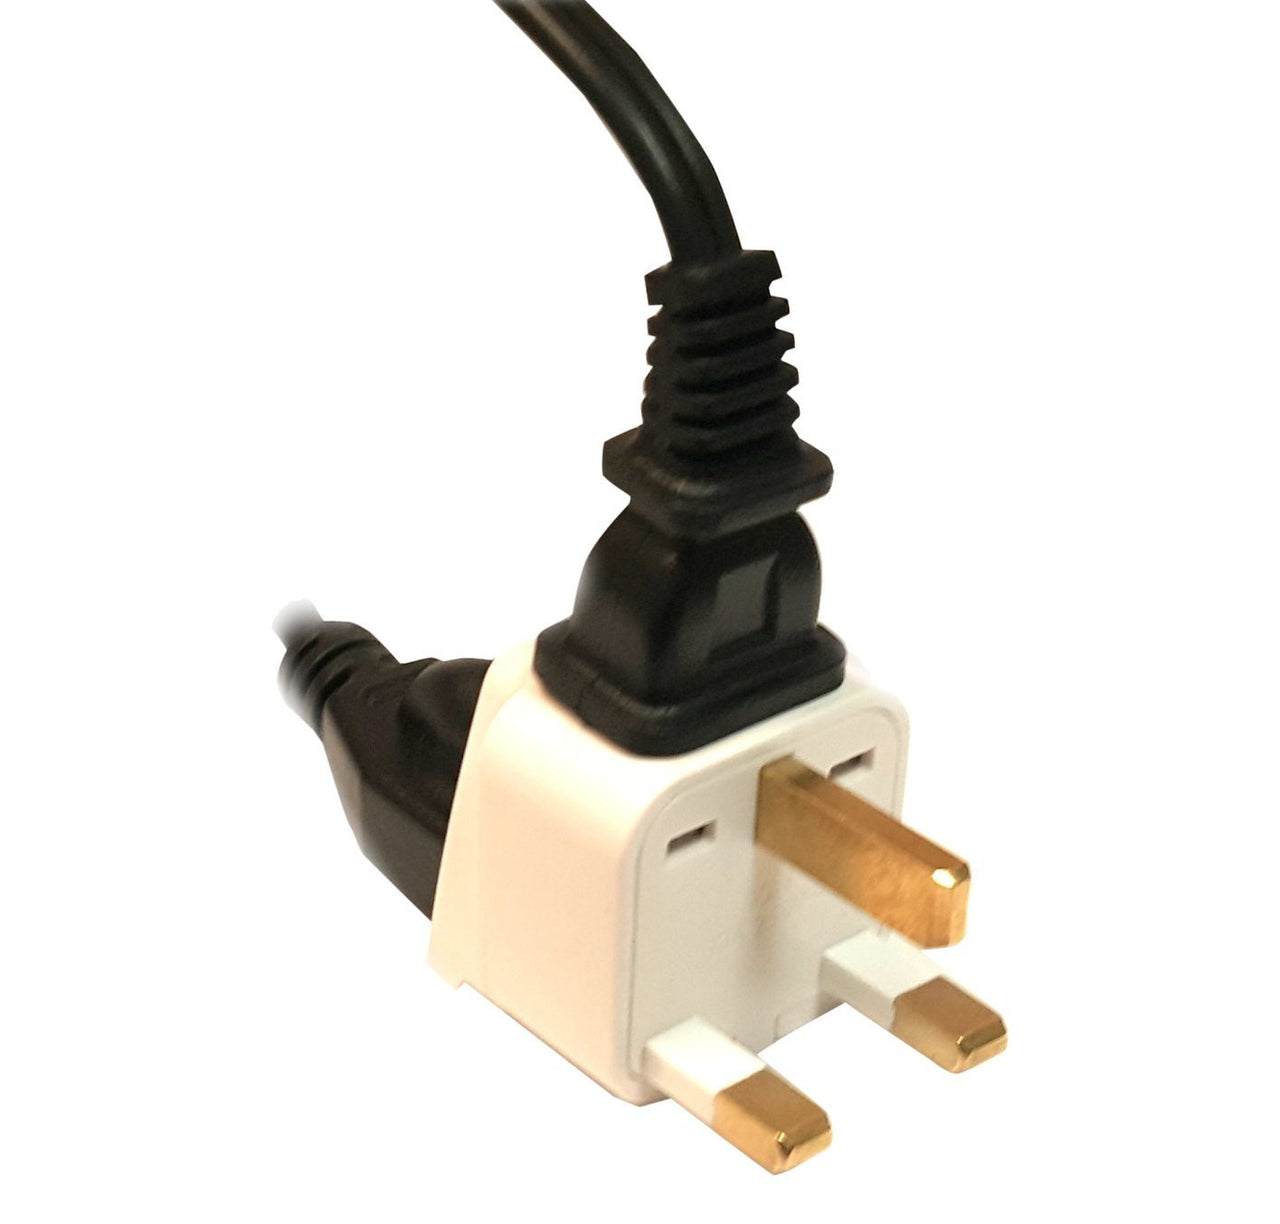 UK, Hong Kong, Singapore, UAE - Type G 2 in 1 - Travel Plug Adapter - Popularelectronics.com